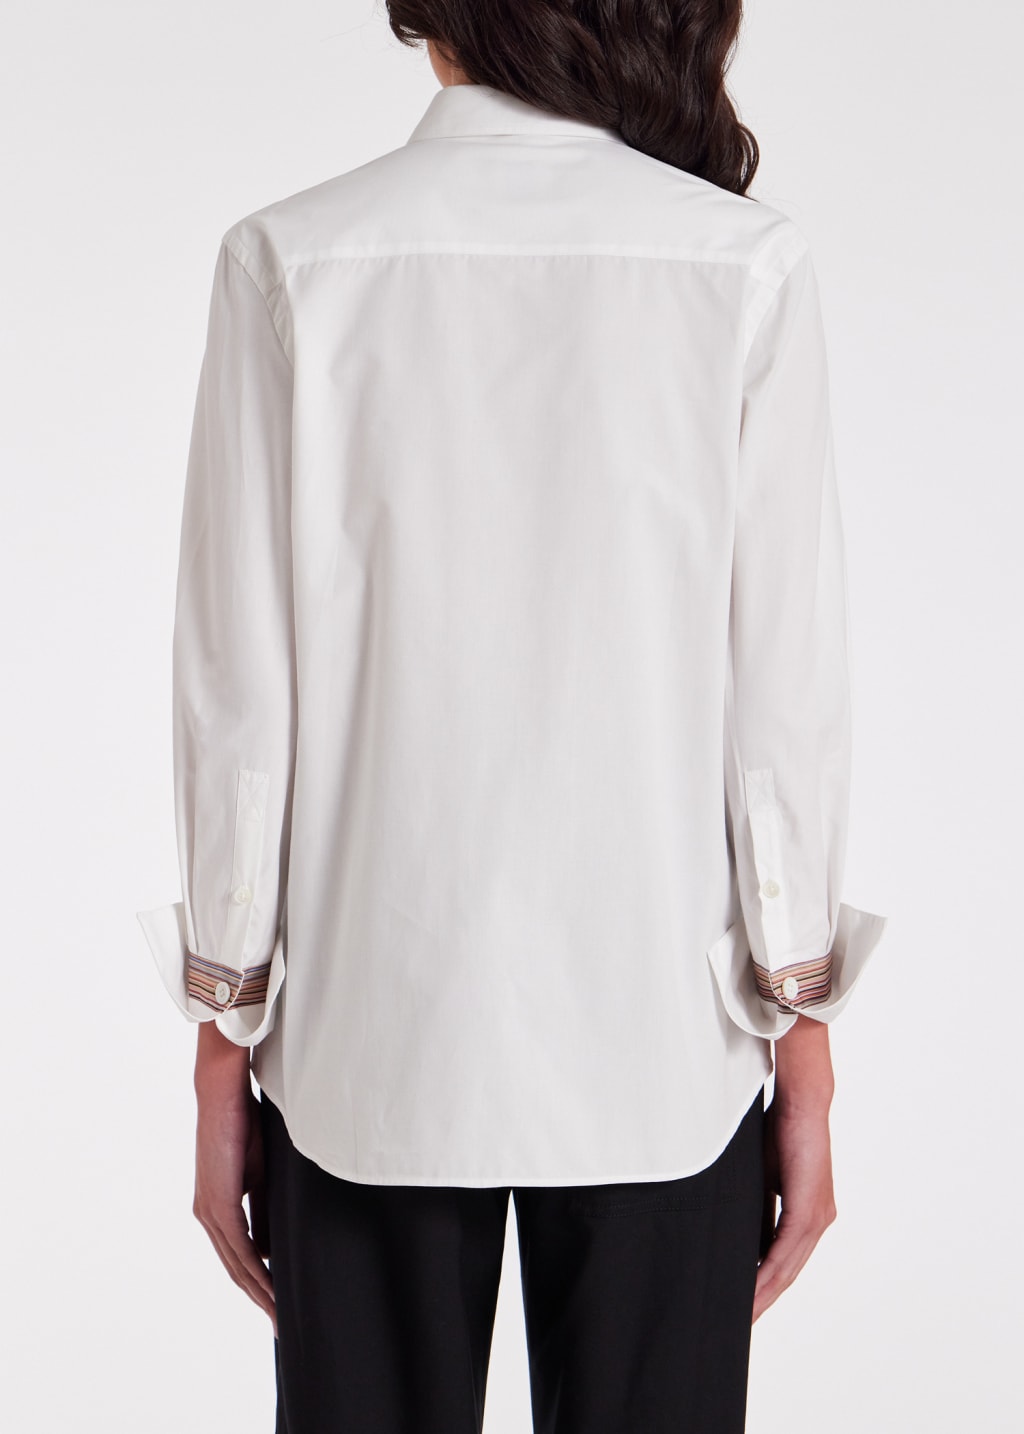 Model View - Women's White 'Signature Stripe' Cuff Shirt Paul Smith